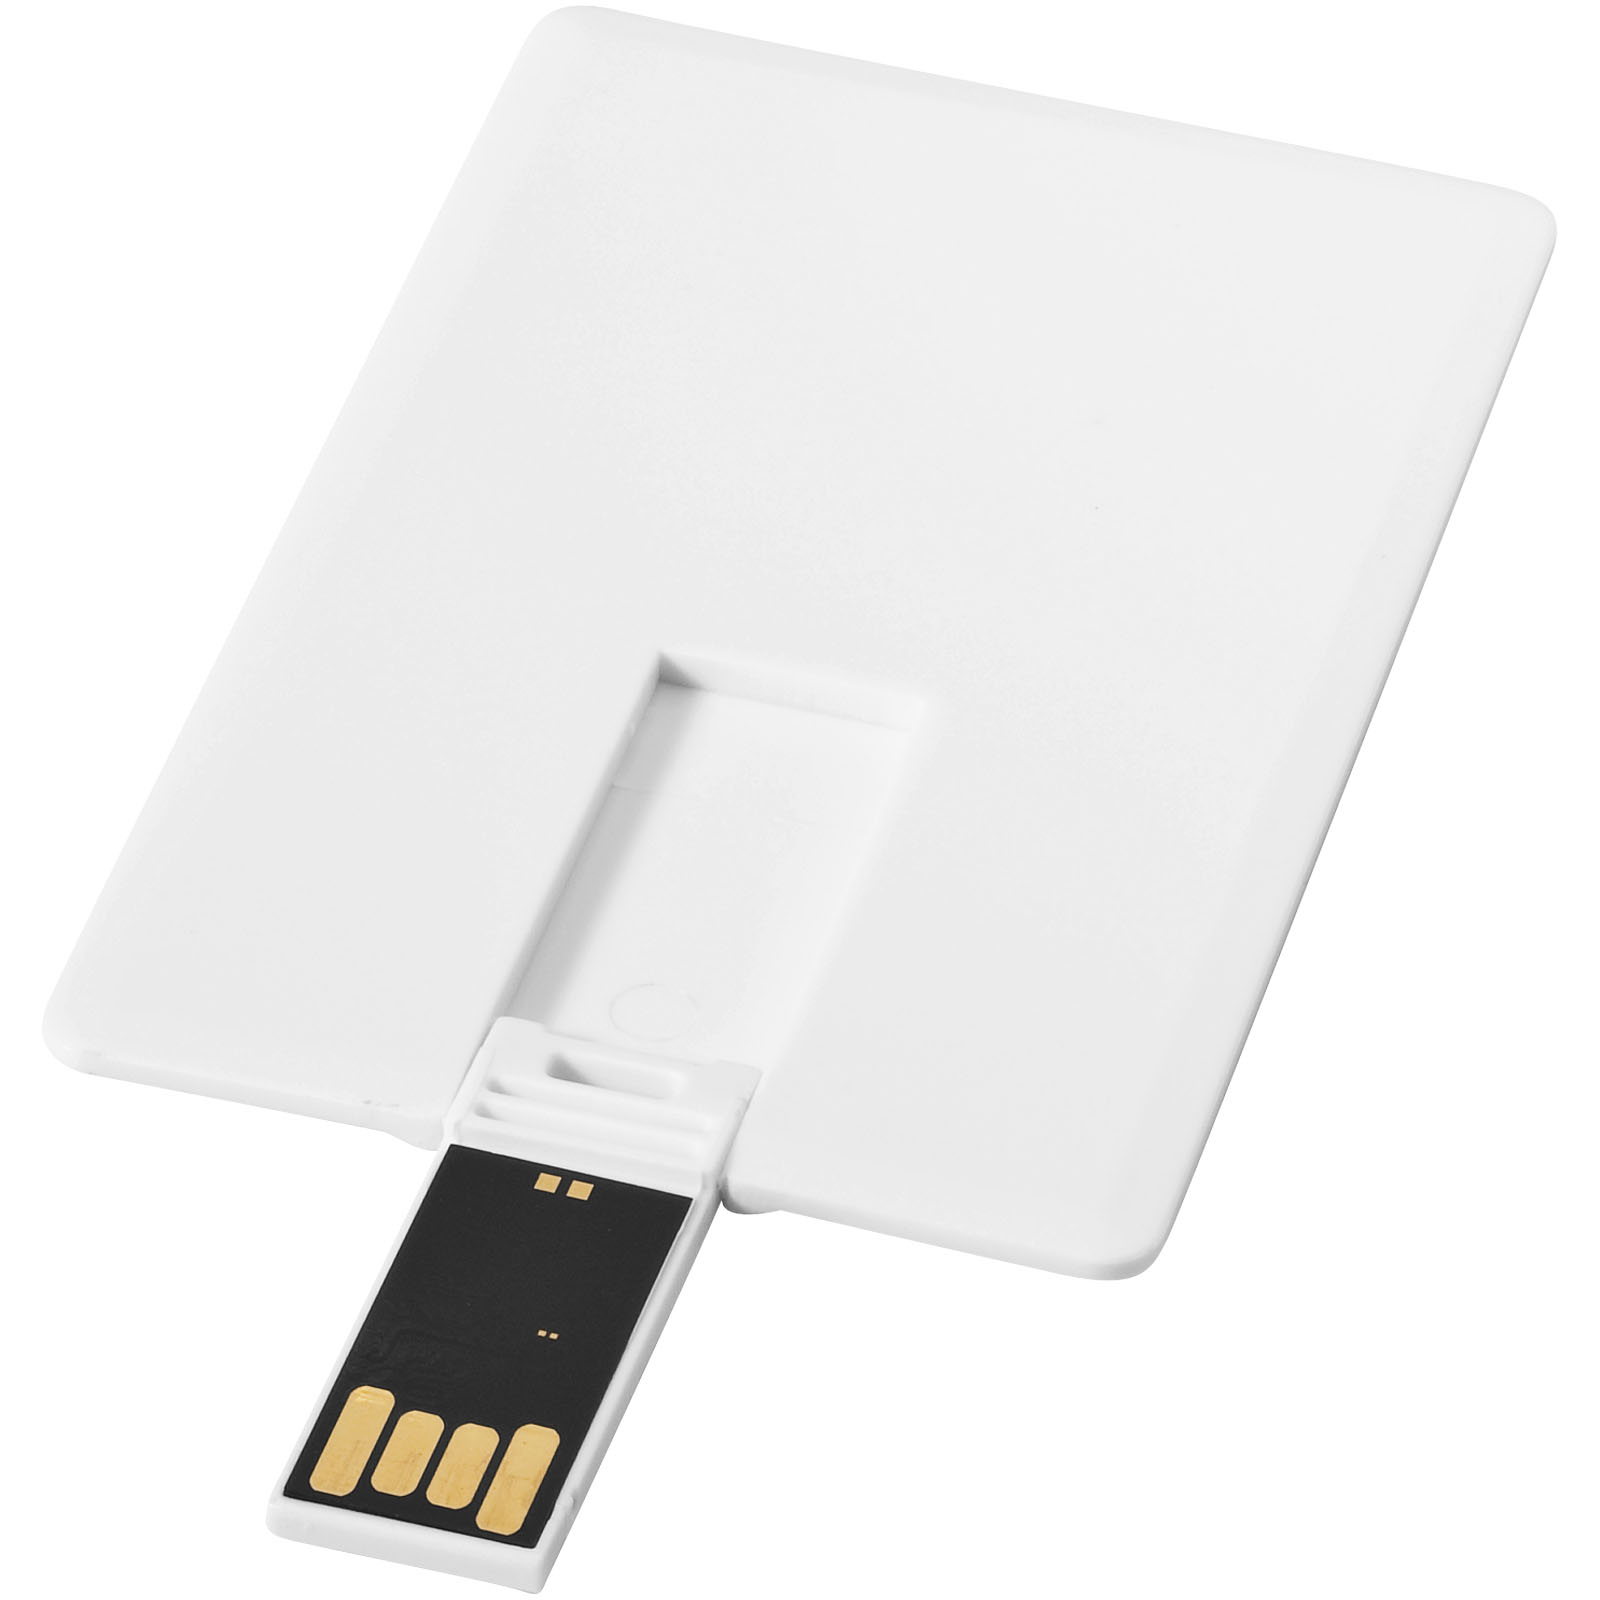 Advertising USB Flash Drives - Slim card-shaped 2GB USB flash drive - 0